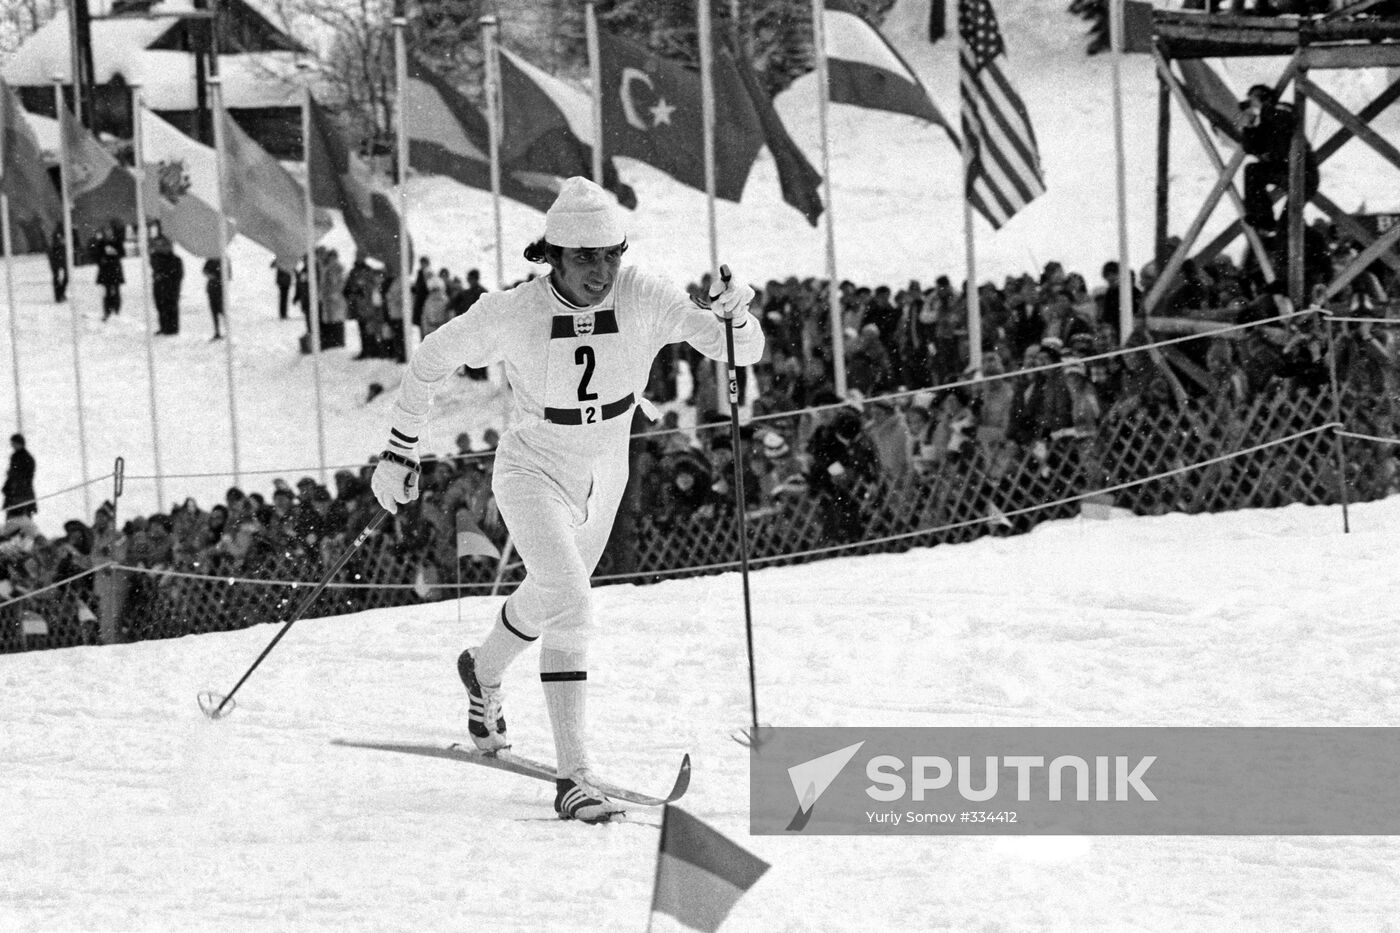 XII Olympic Winter Games in Innsbruck